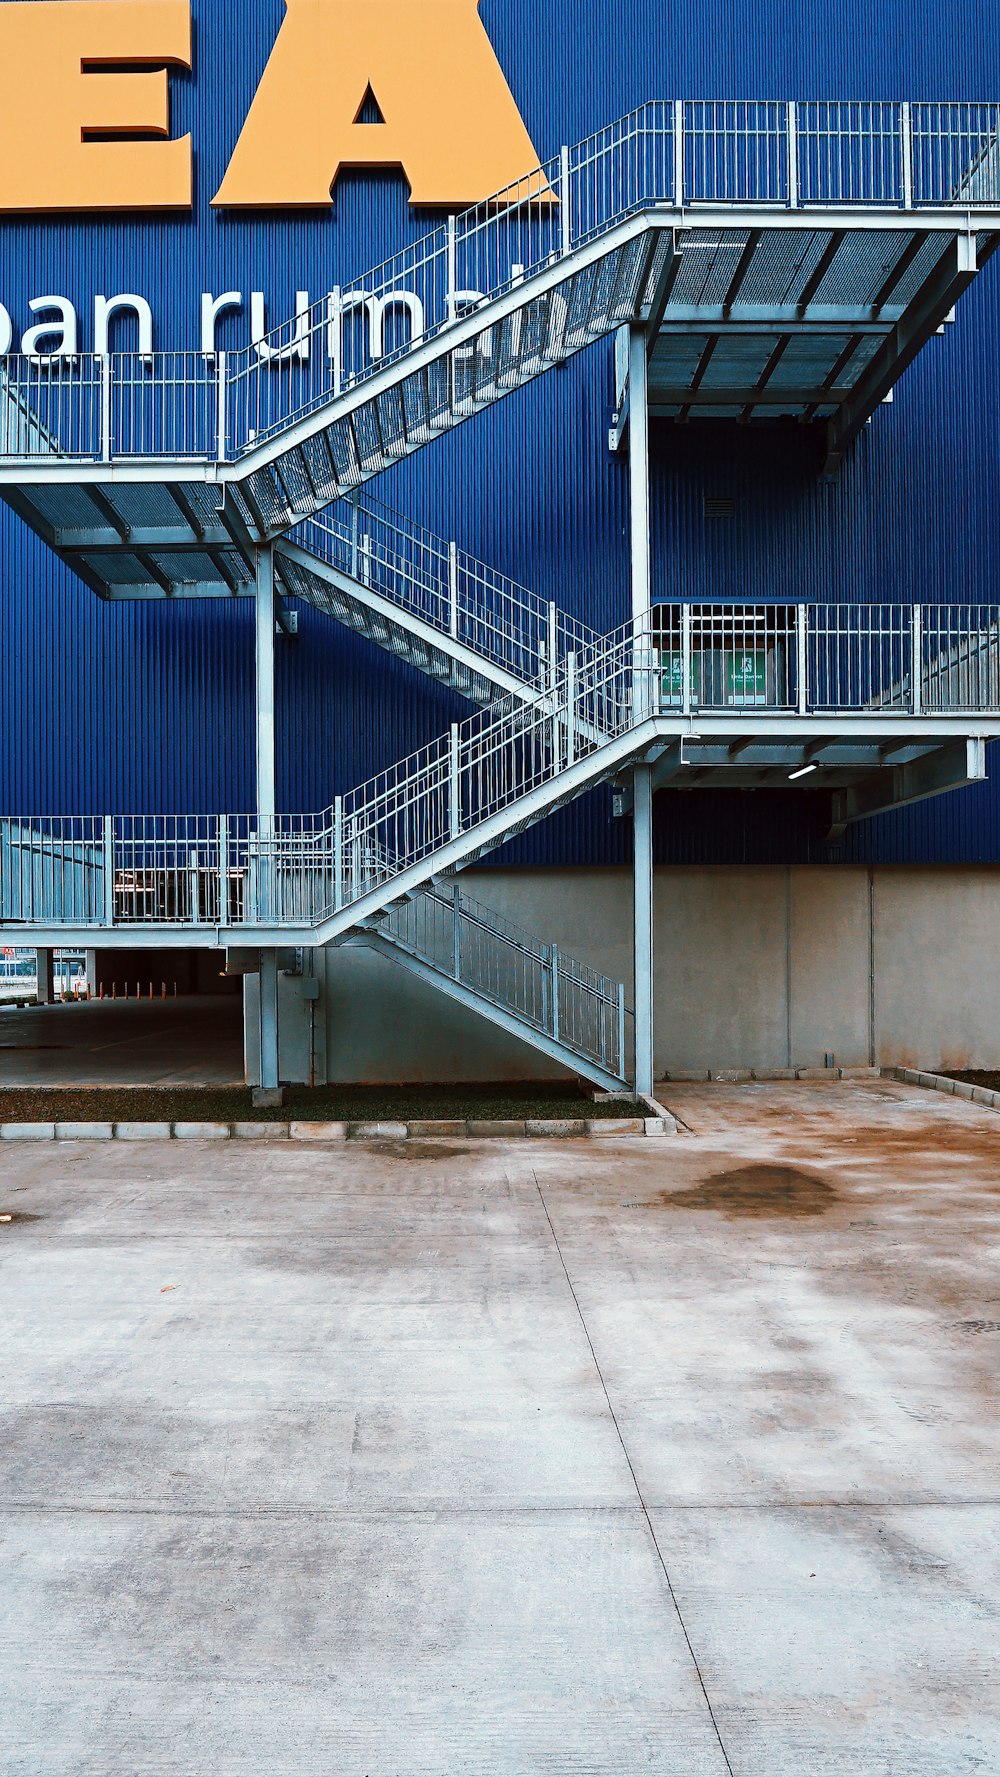 Escalier métallique bleu et blanc